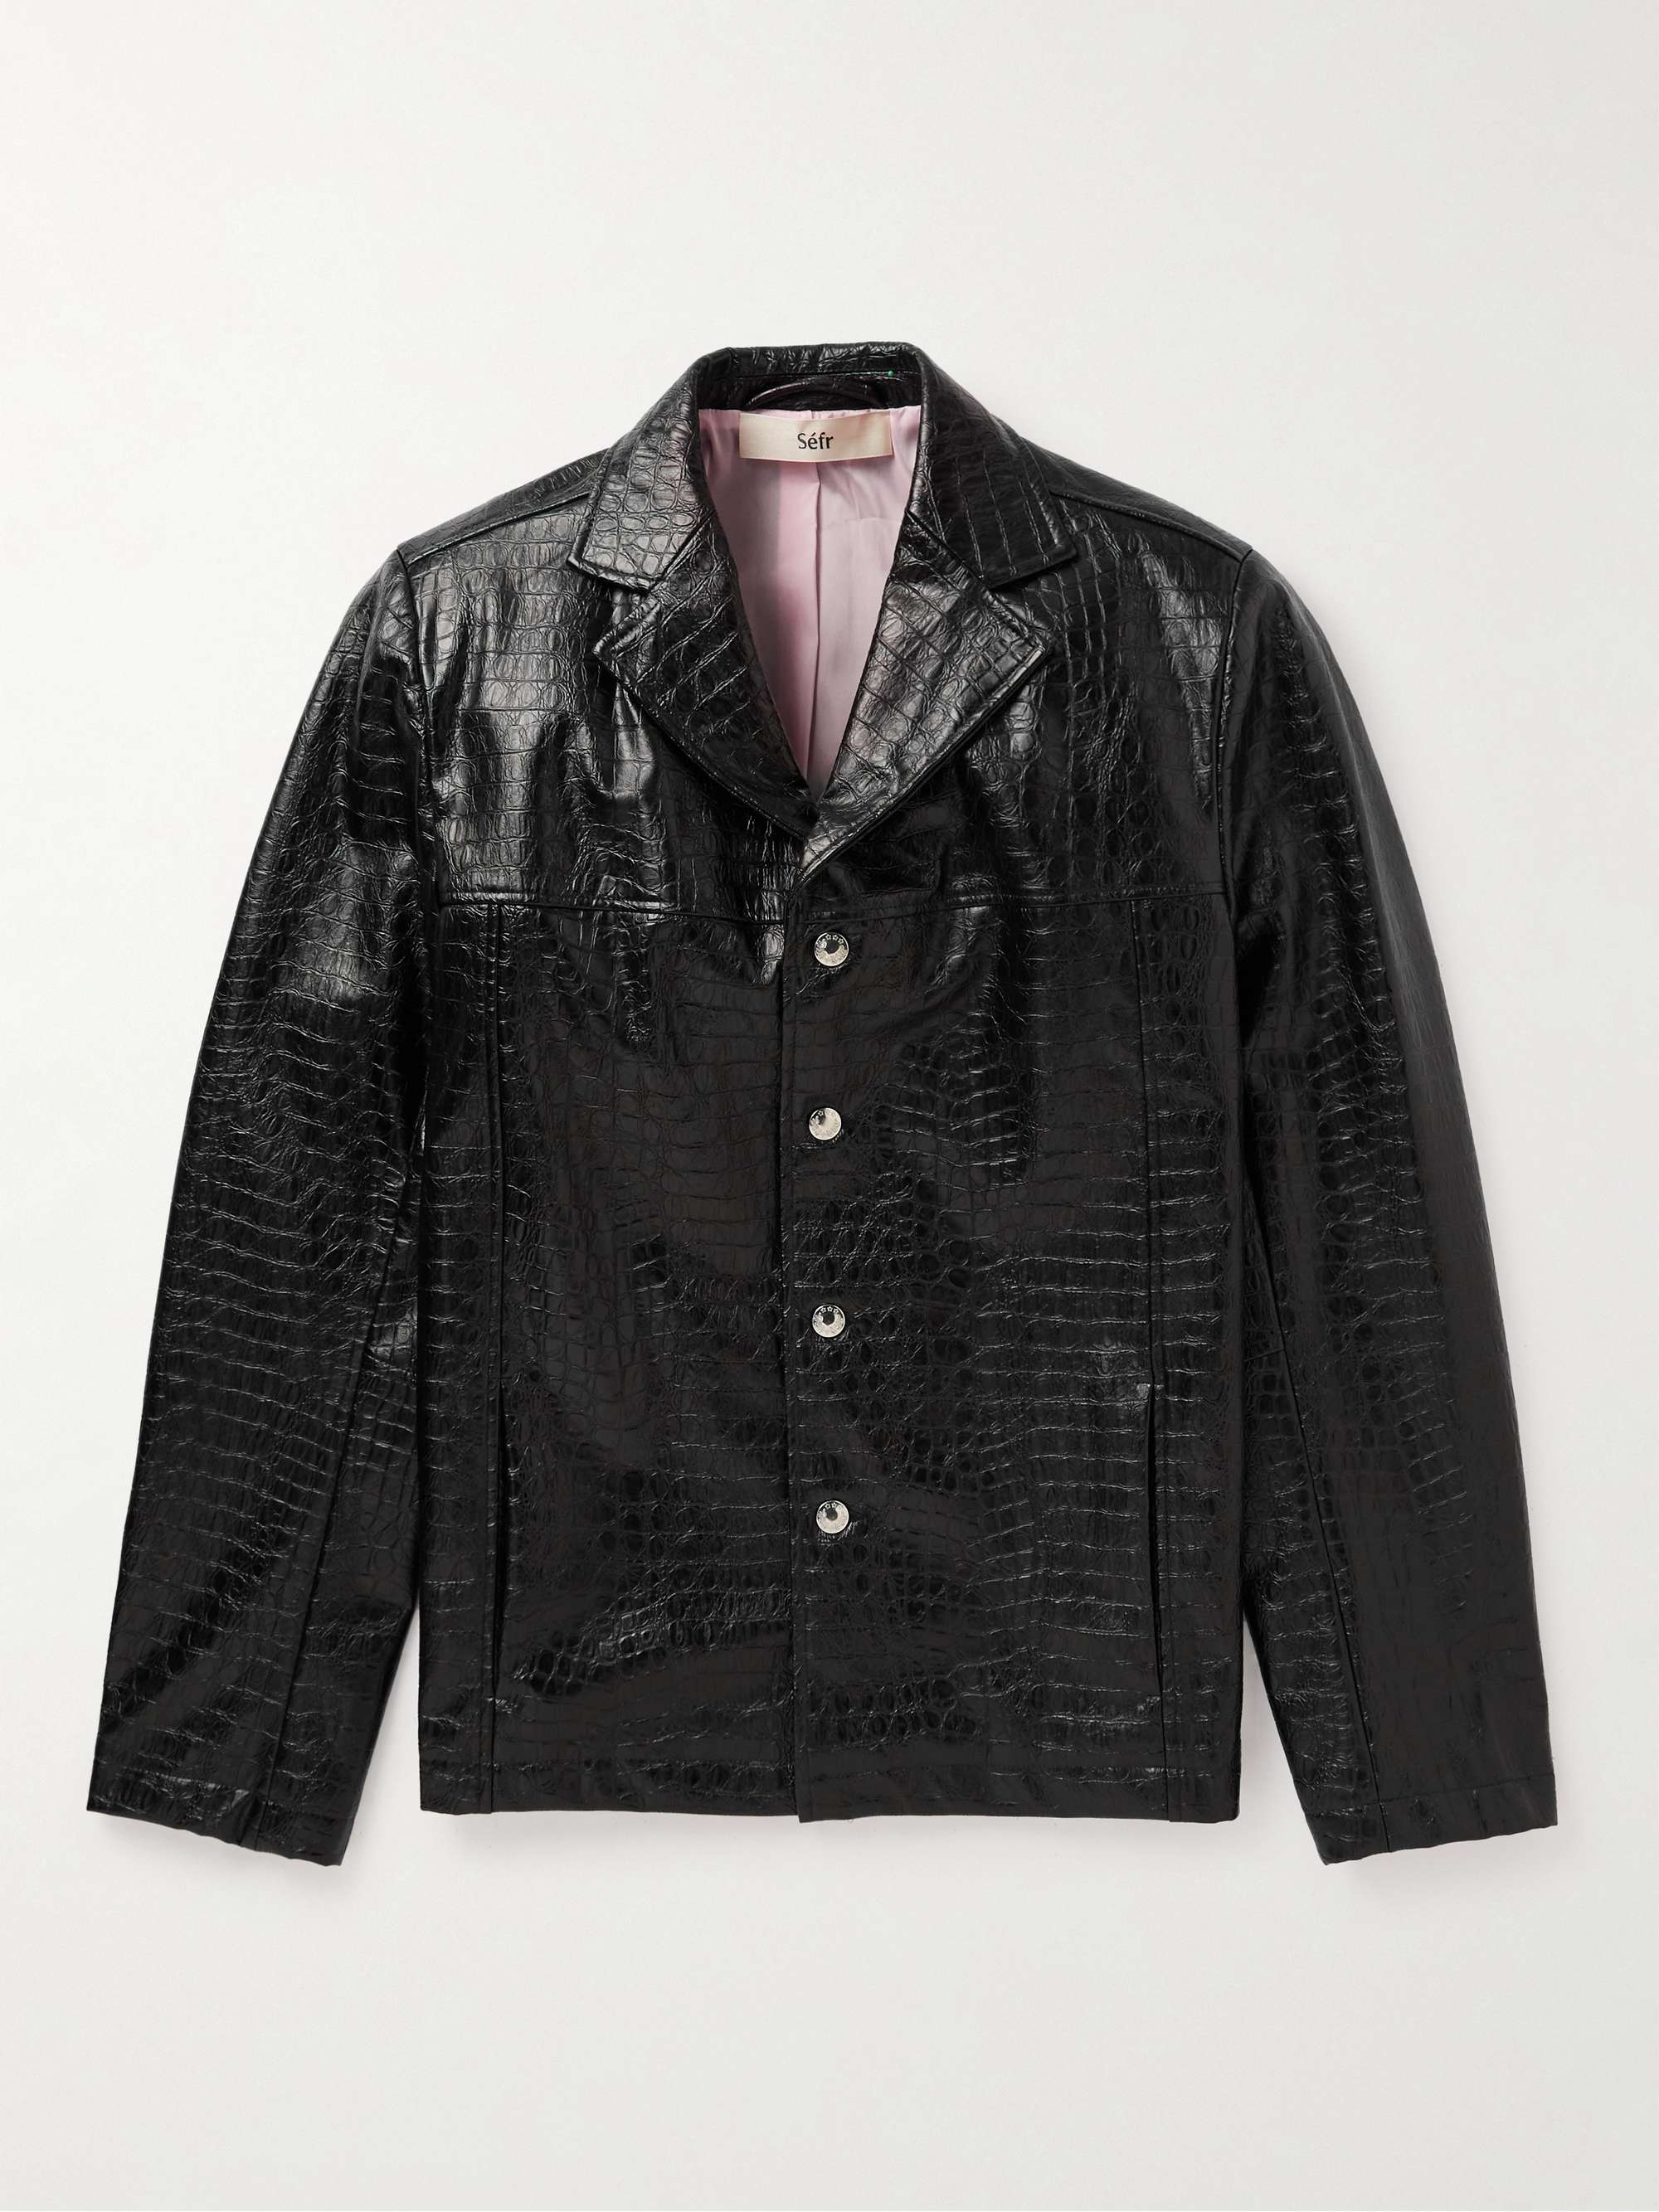 Crocodile Coats, Jackets & Vests for Men for Sale, Shop New & Used